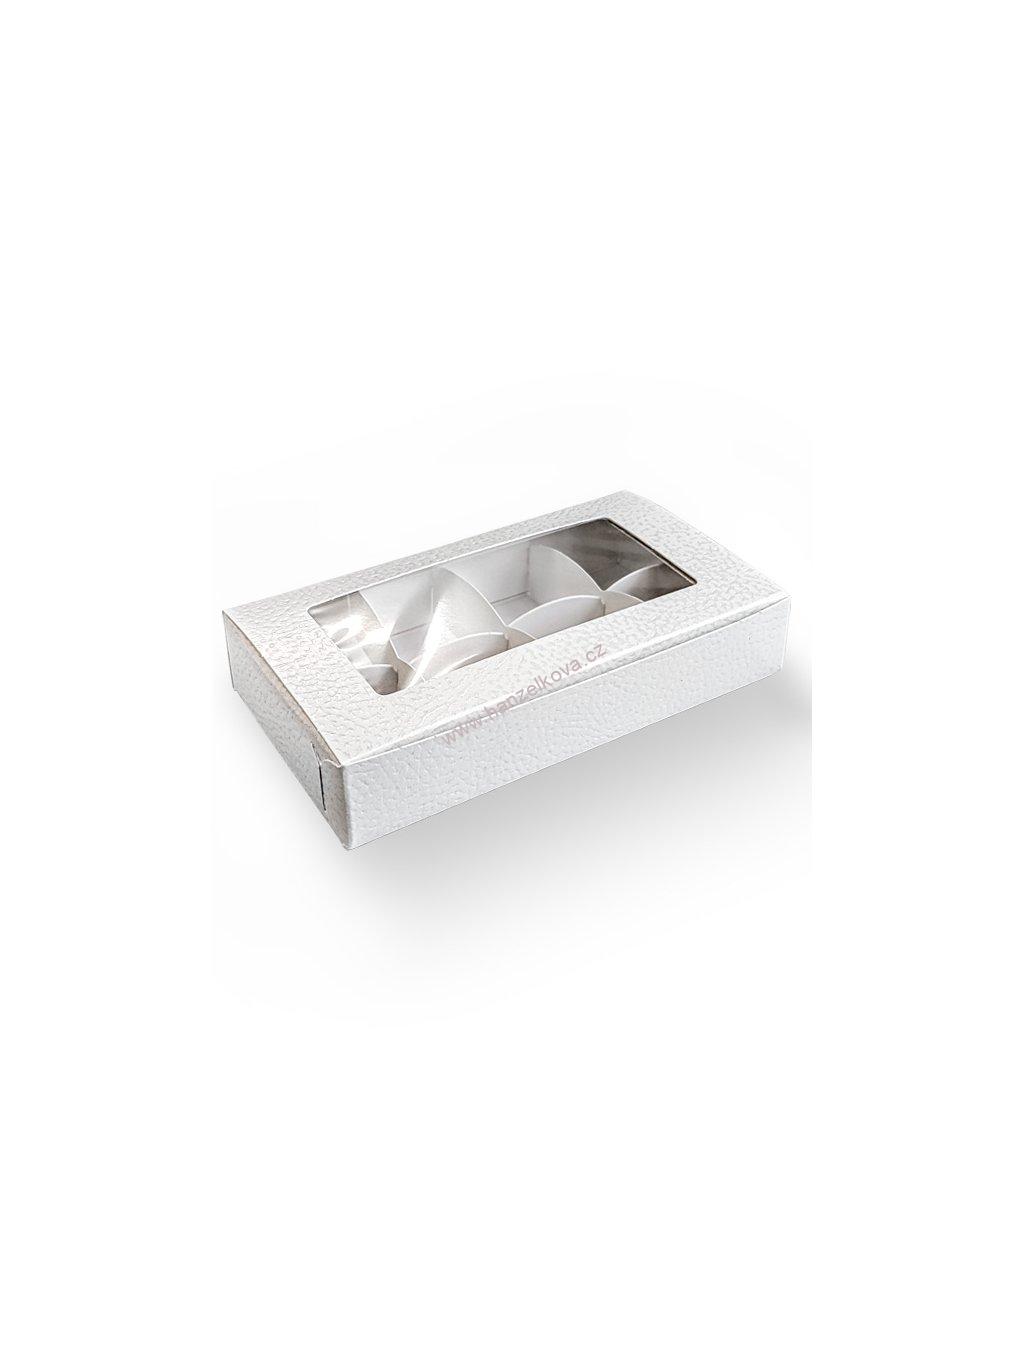 Krabička na pralinky bílá kůže 160x80x30mm s mřížkou